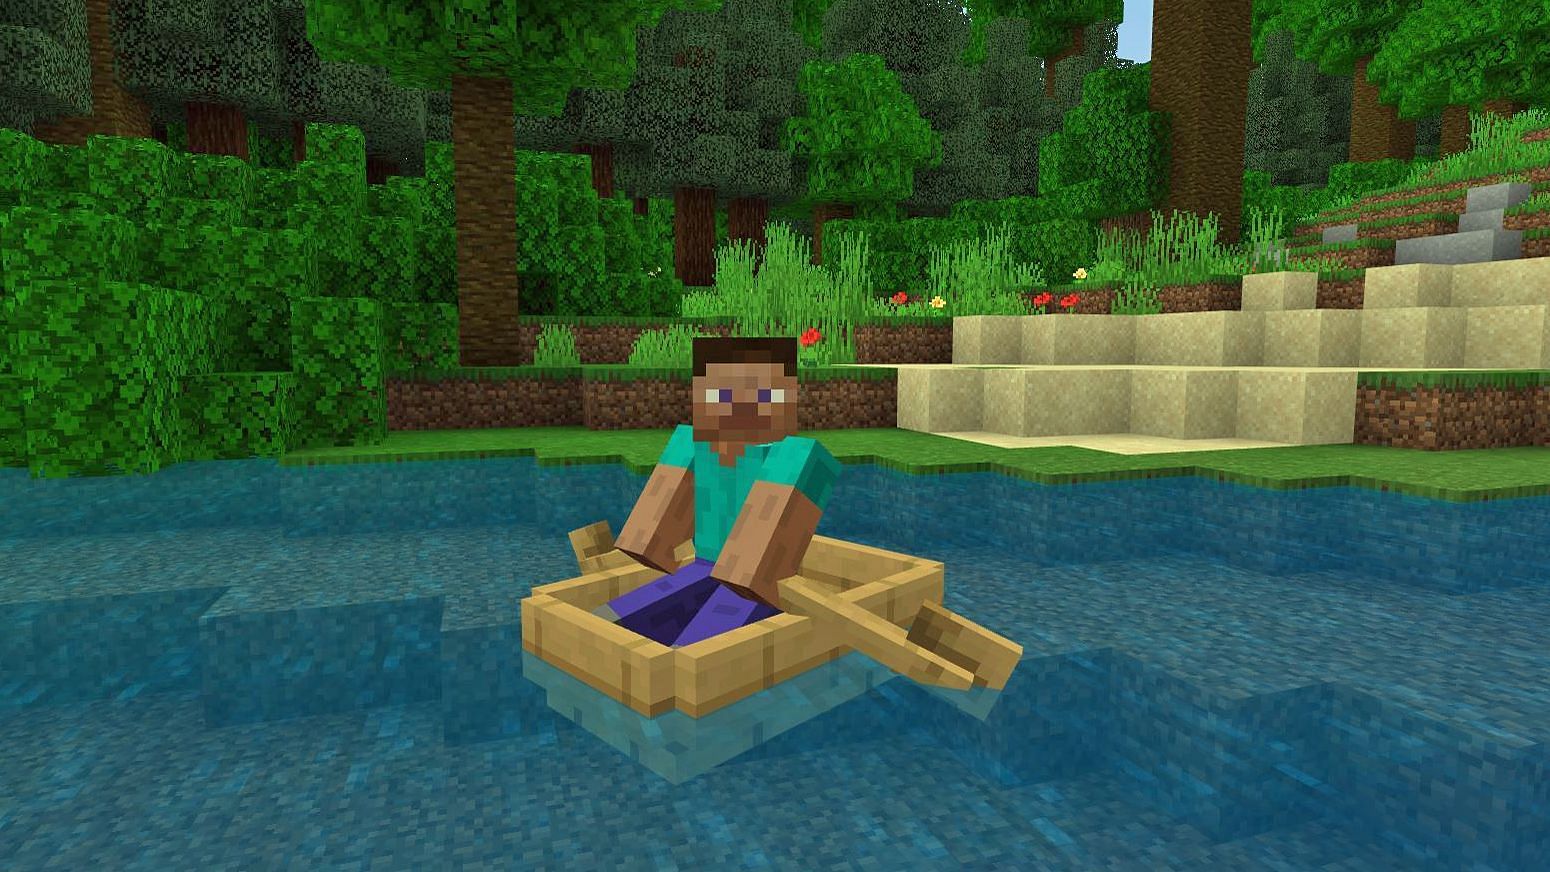 Boat in Minecraft (Image via Minecraft Education)